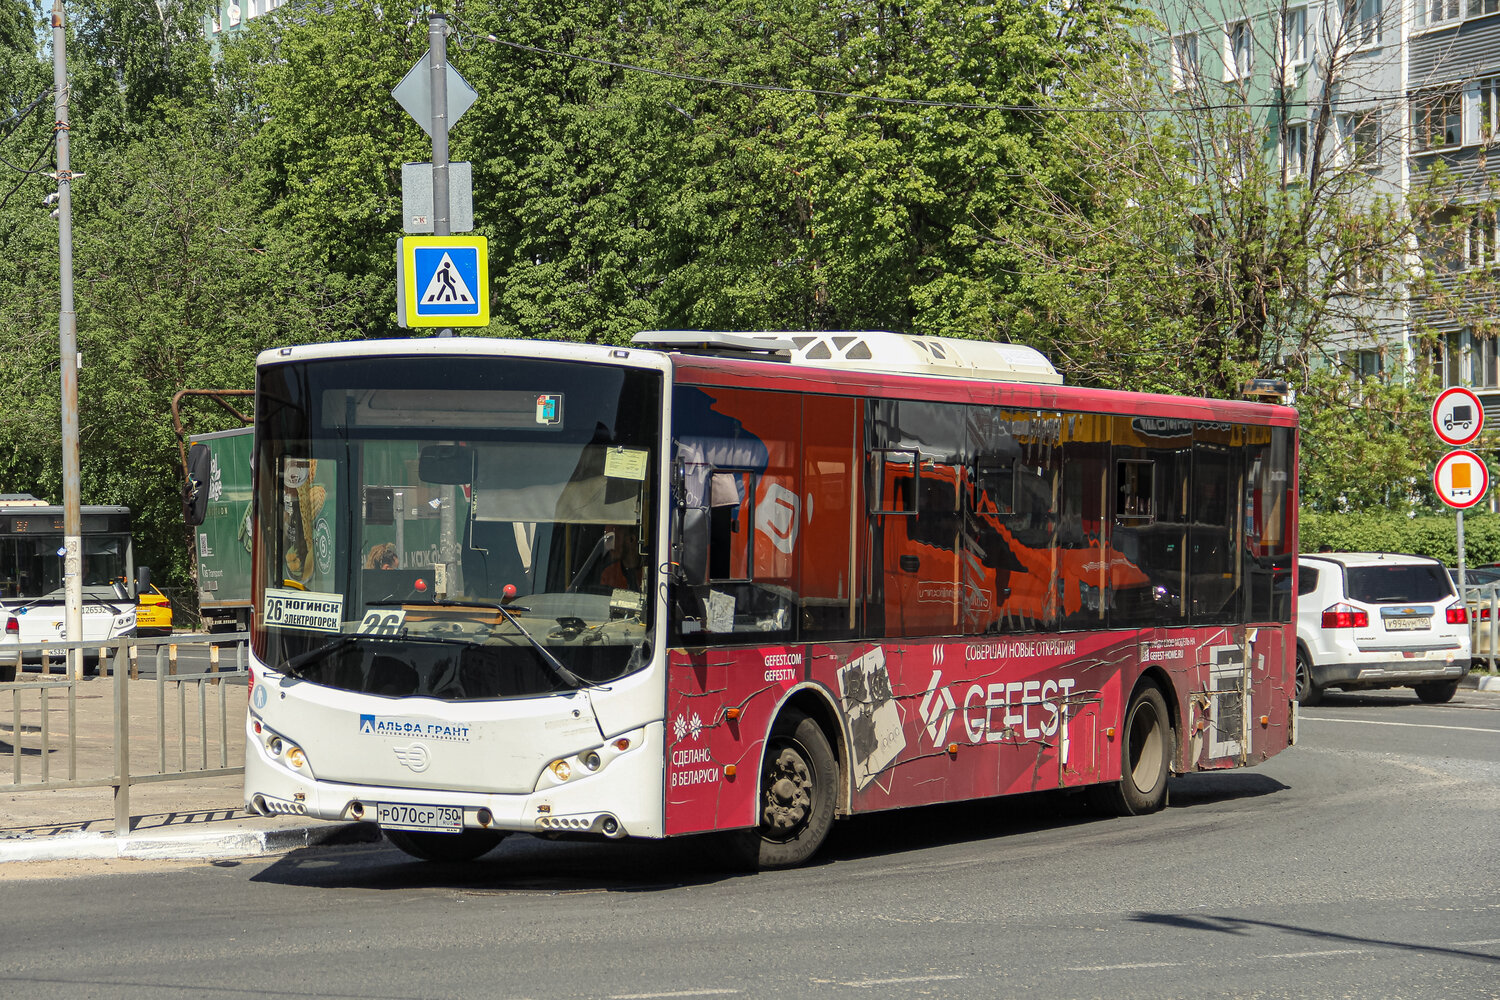 Moscow region, Volgabus-5270.0H # Р 070 СР 750